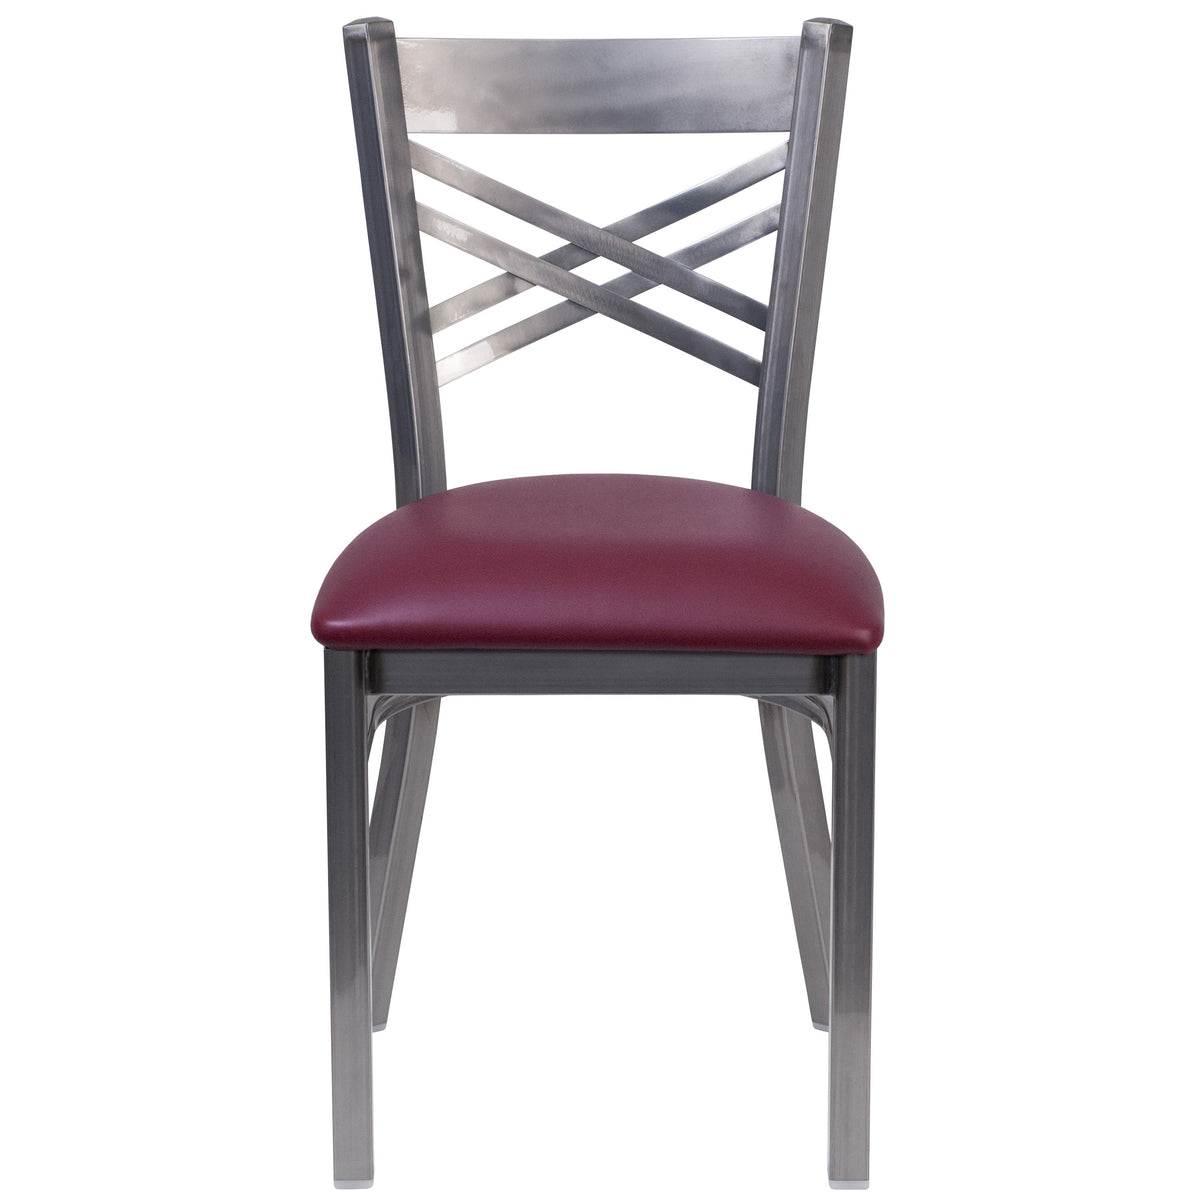 Burgundy Vinyl Seat/Clear Coated Metal Frame |#| Clear Coated inchXinch Back Metal Restaurant Chair - Burgundy Vinyl Seat